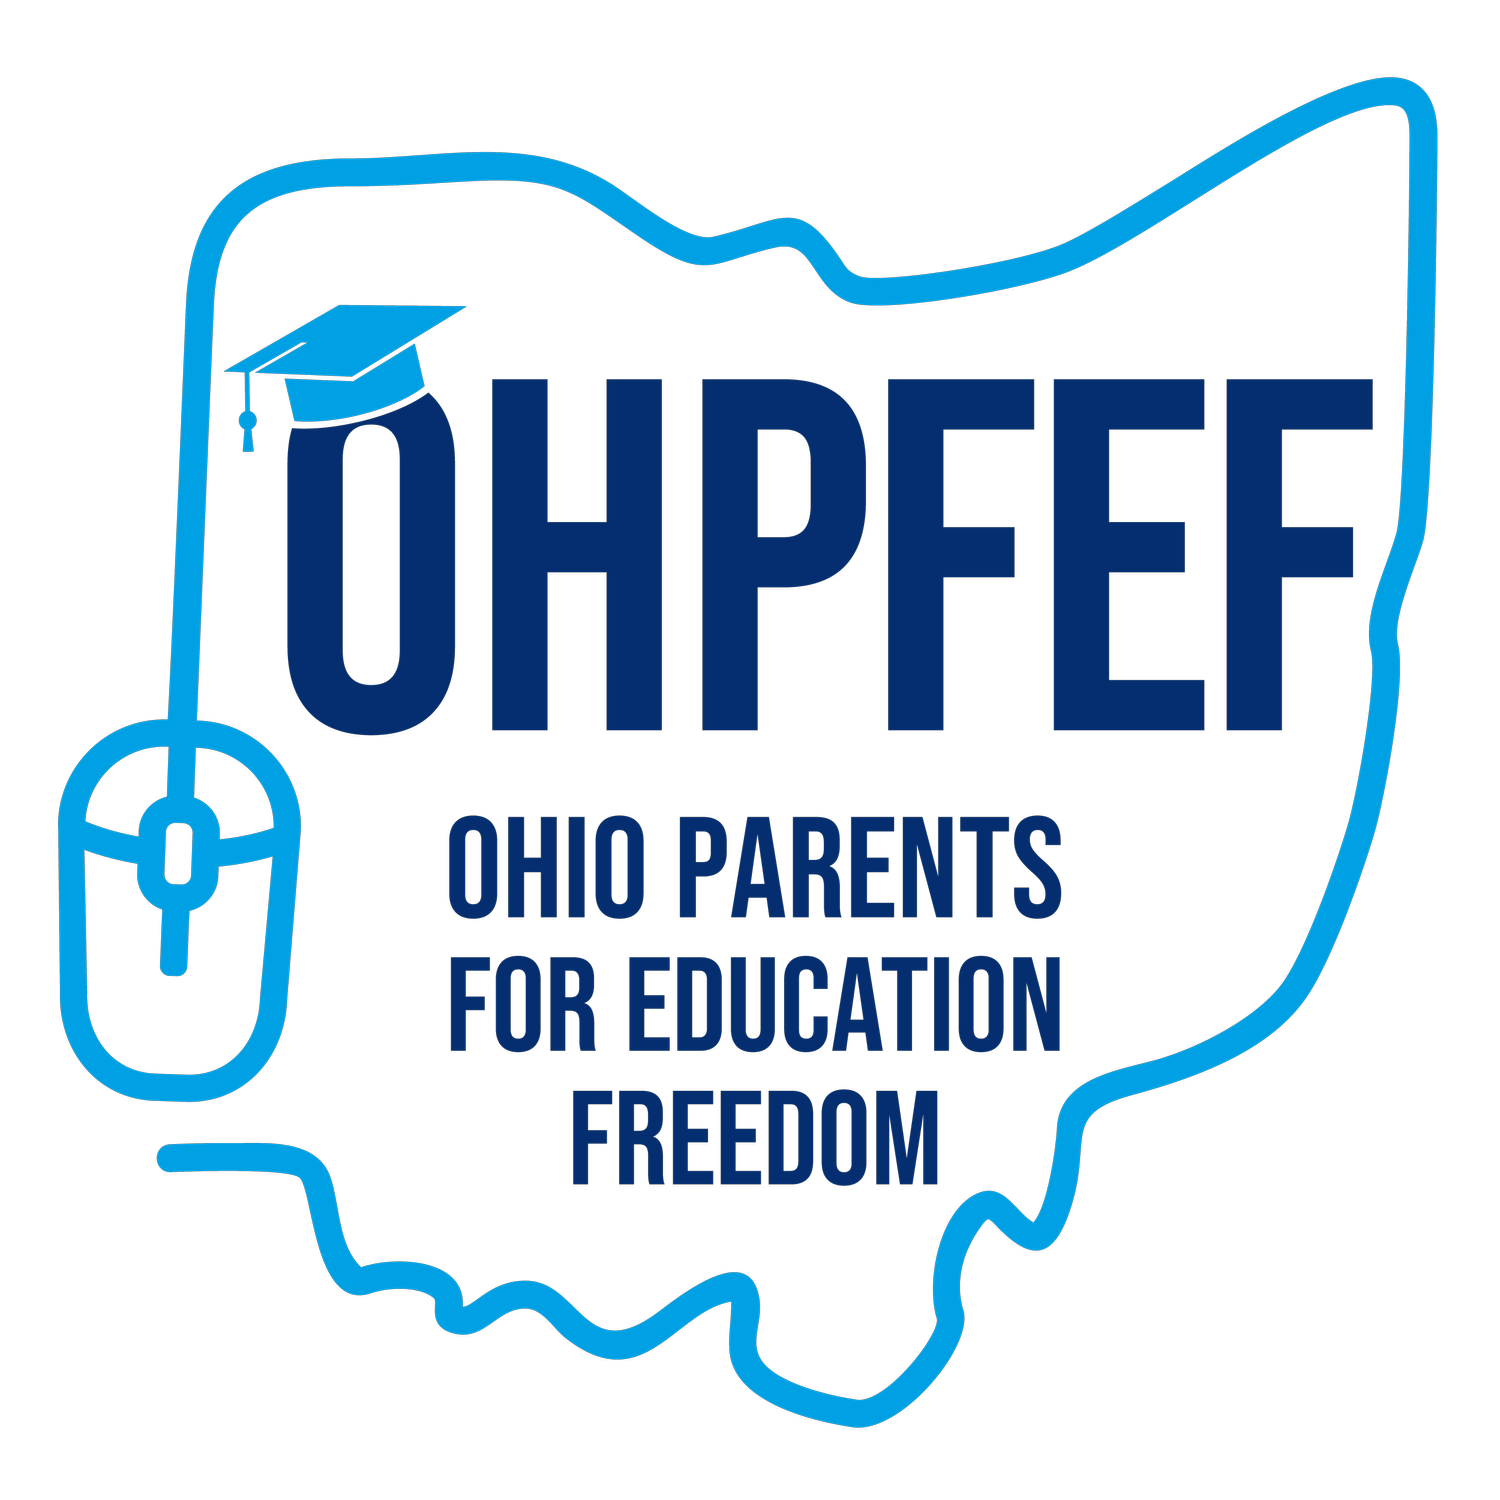 Ohio Parents for Education Freedom